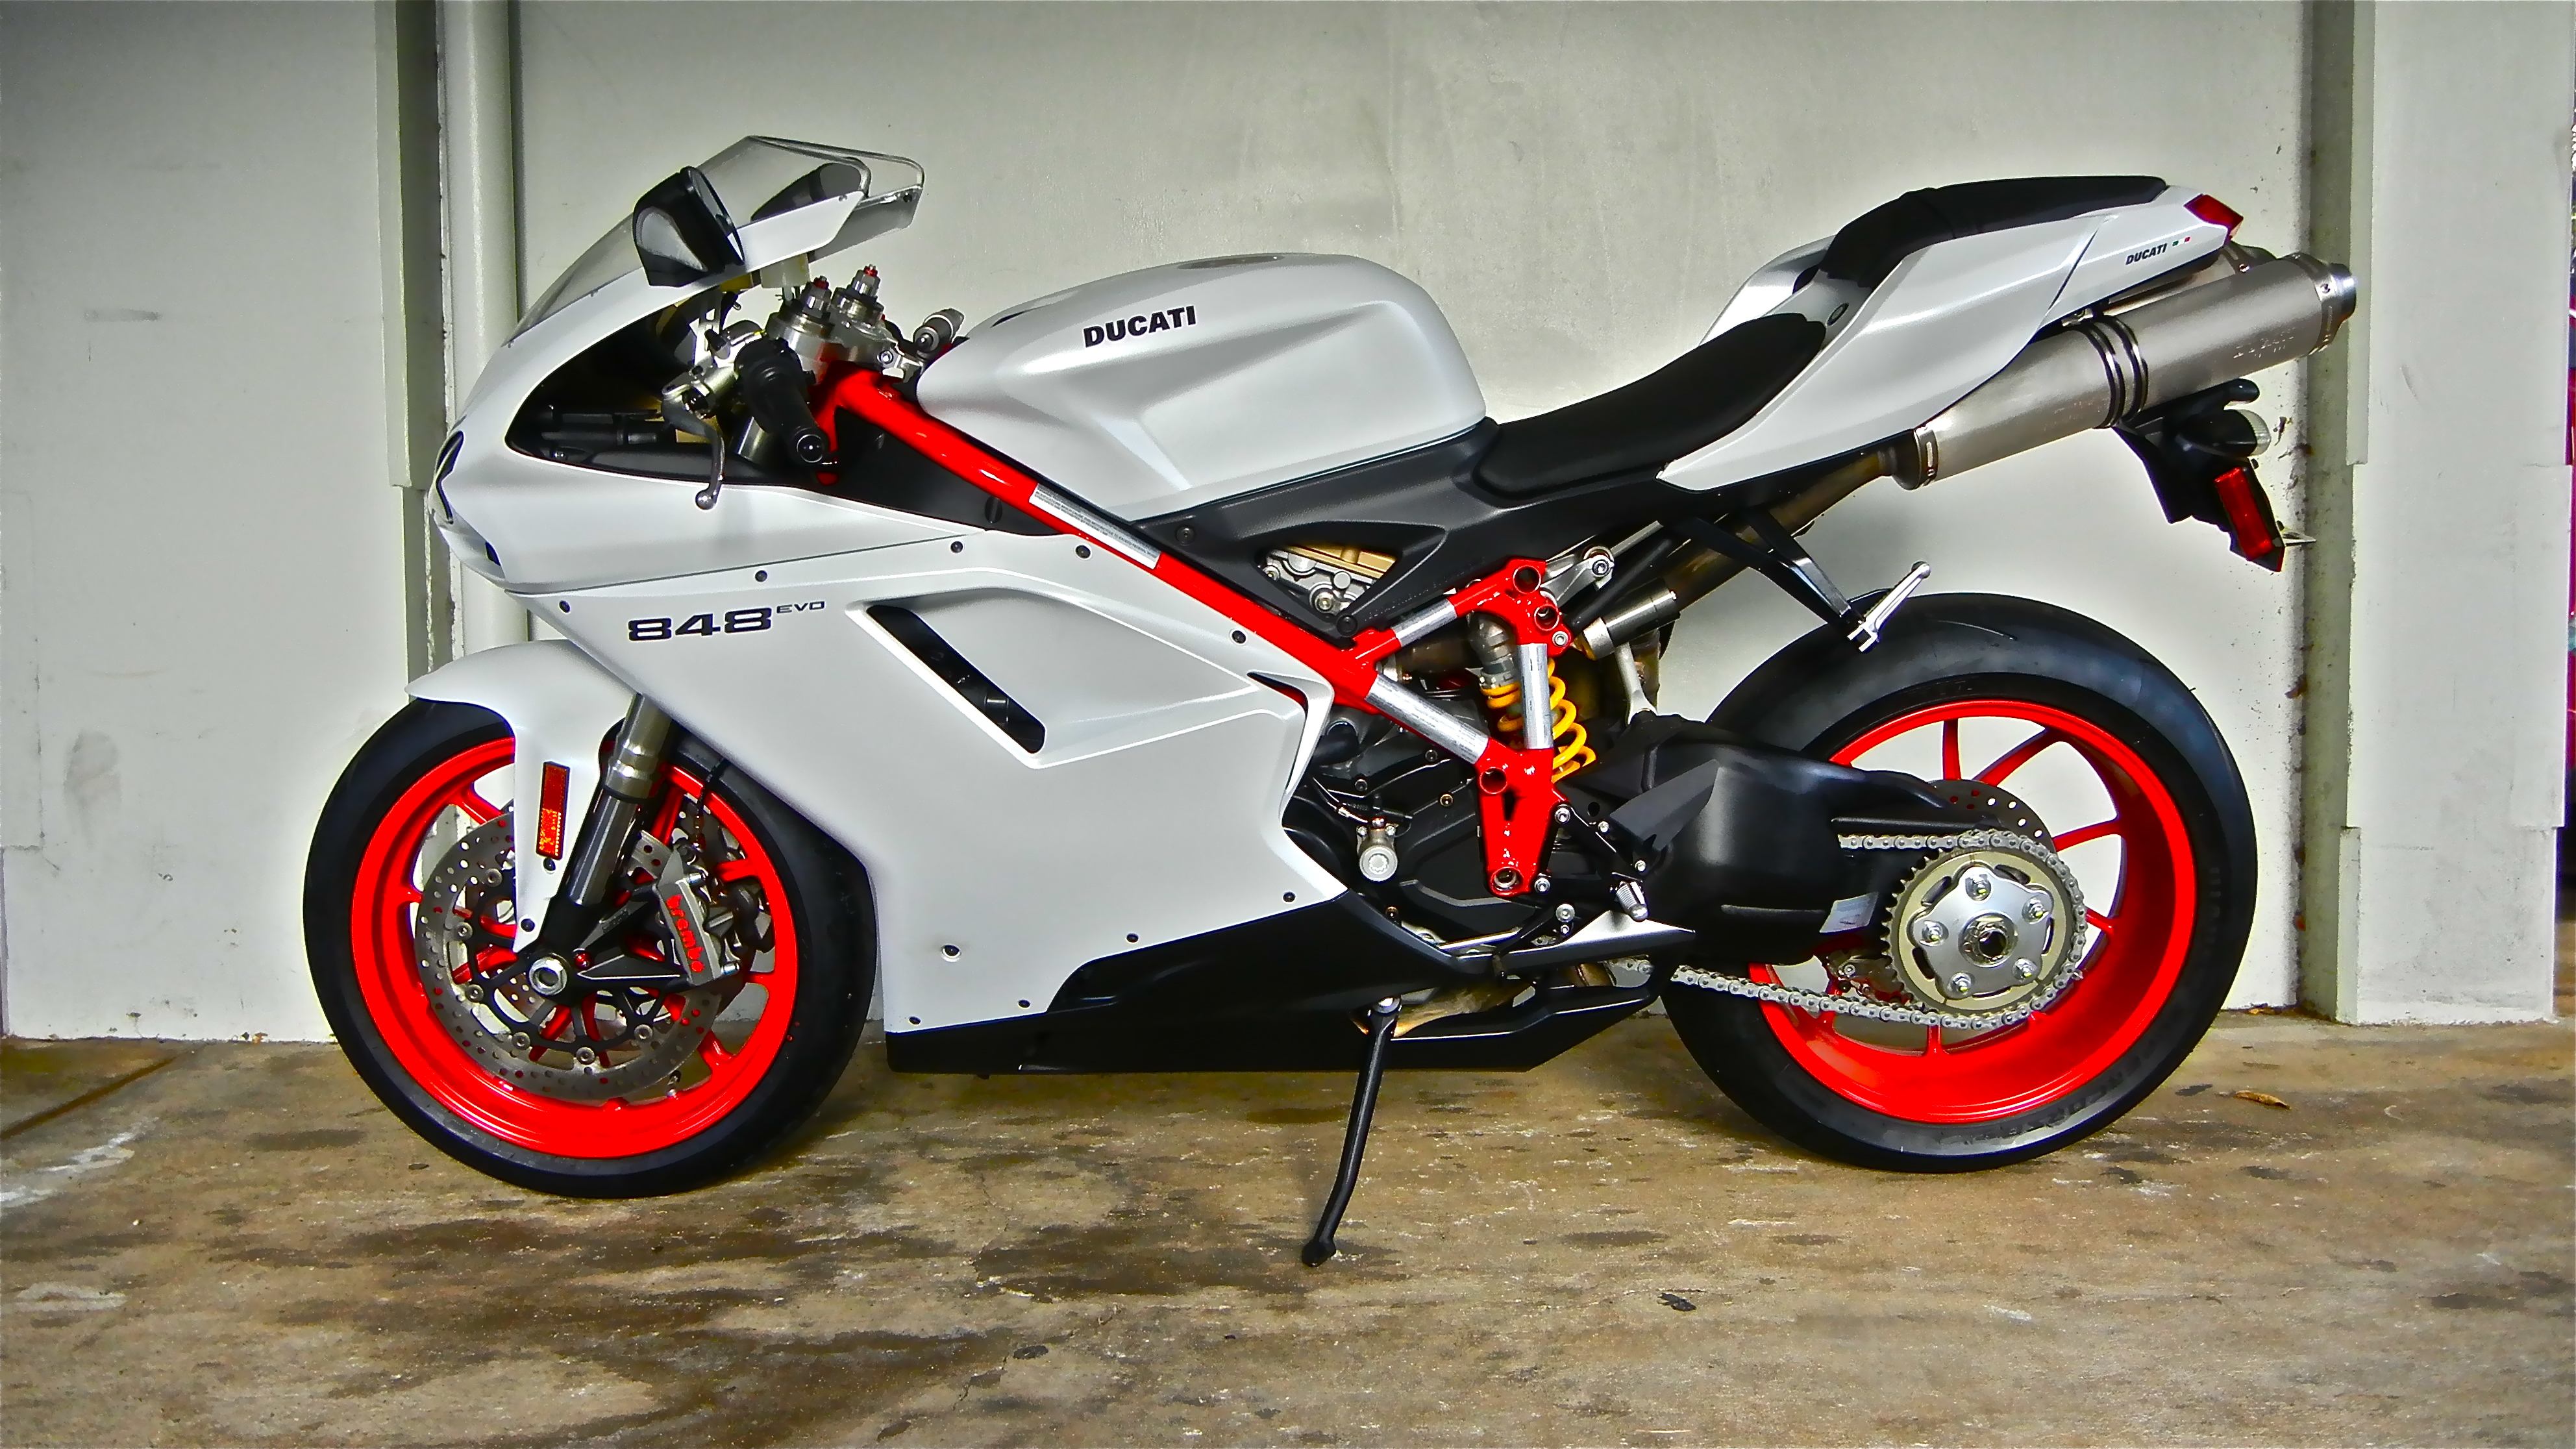 Красно белый мотоцикл. Ducati 848 EVO 2013. Ducati 848 EVO. Дукати 848 Эво. Мотоцикл Дукати 848 EVO.